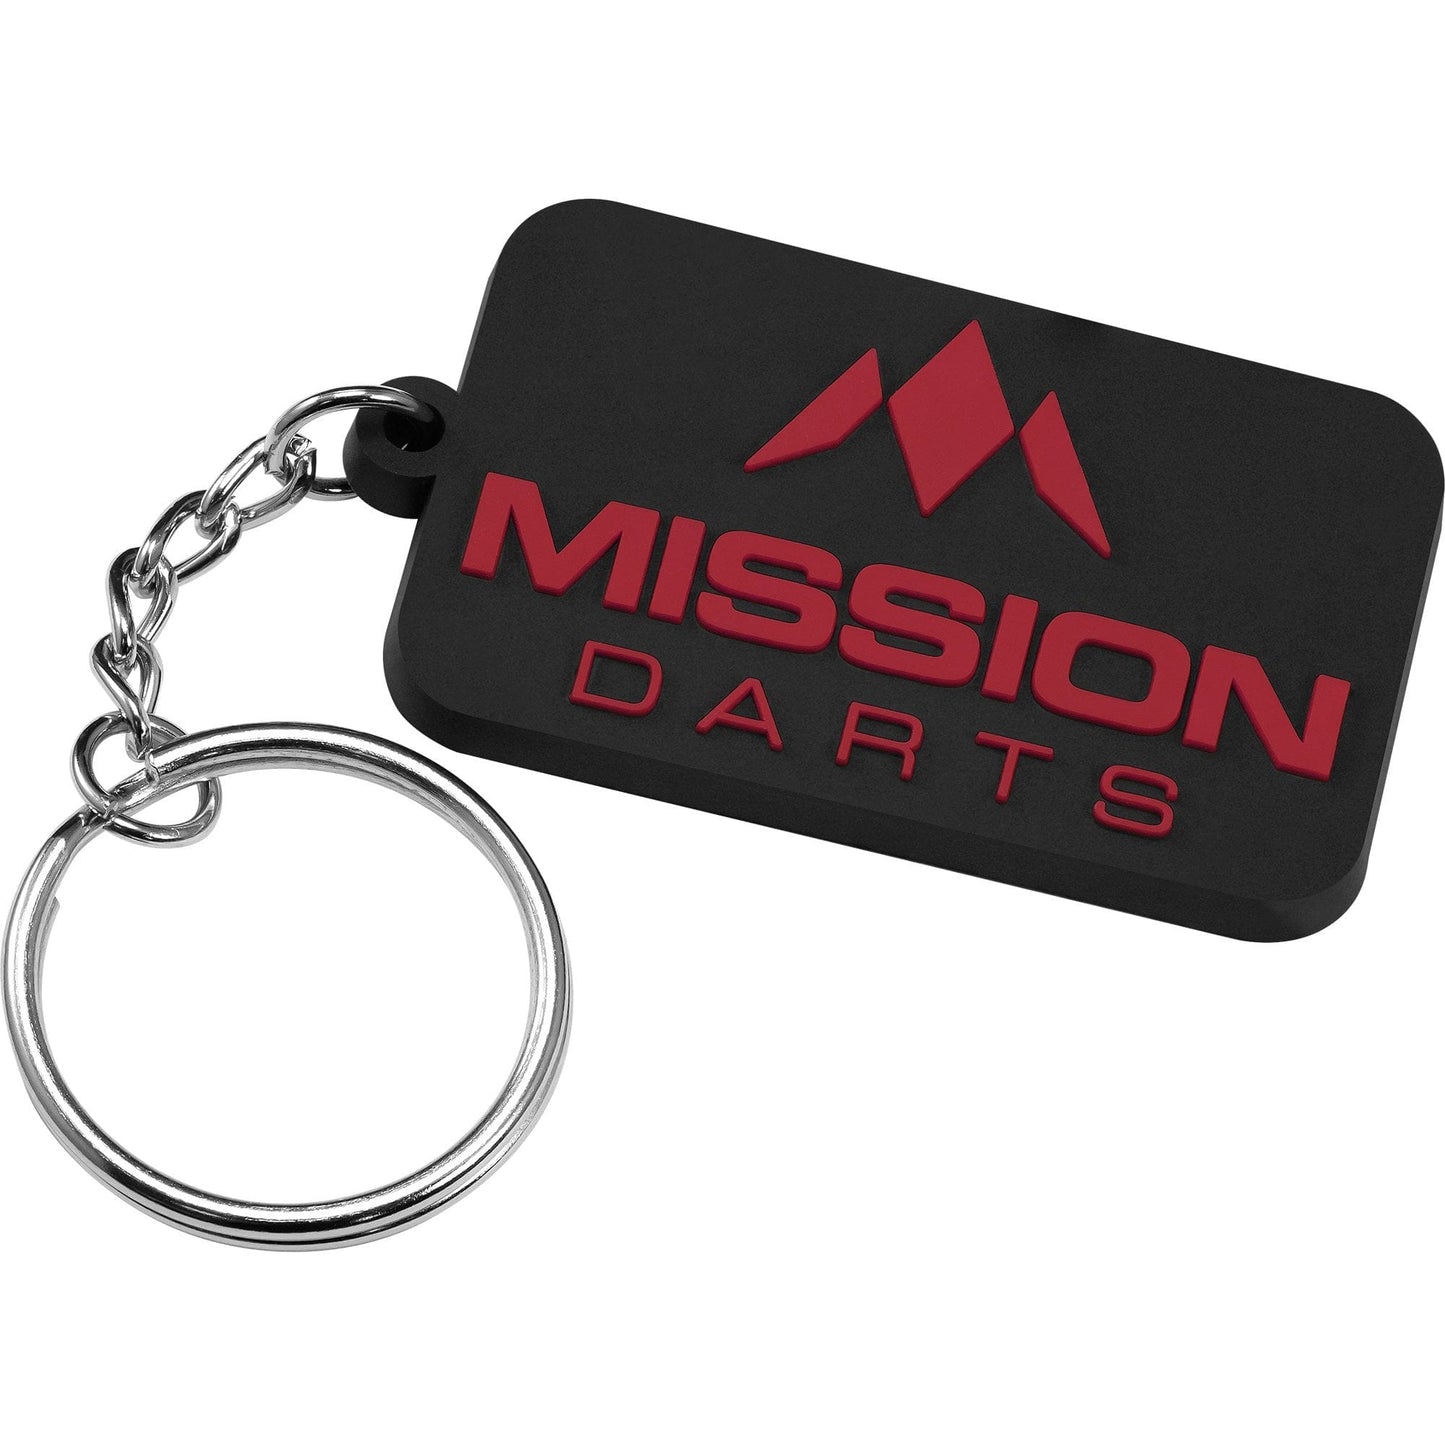 *Mission Logo Keyring - Soft PVC Feel Red